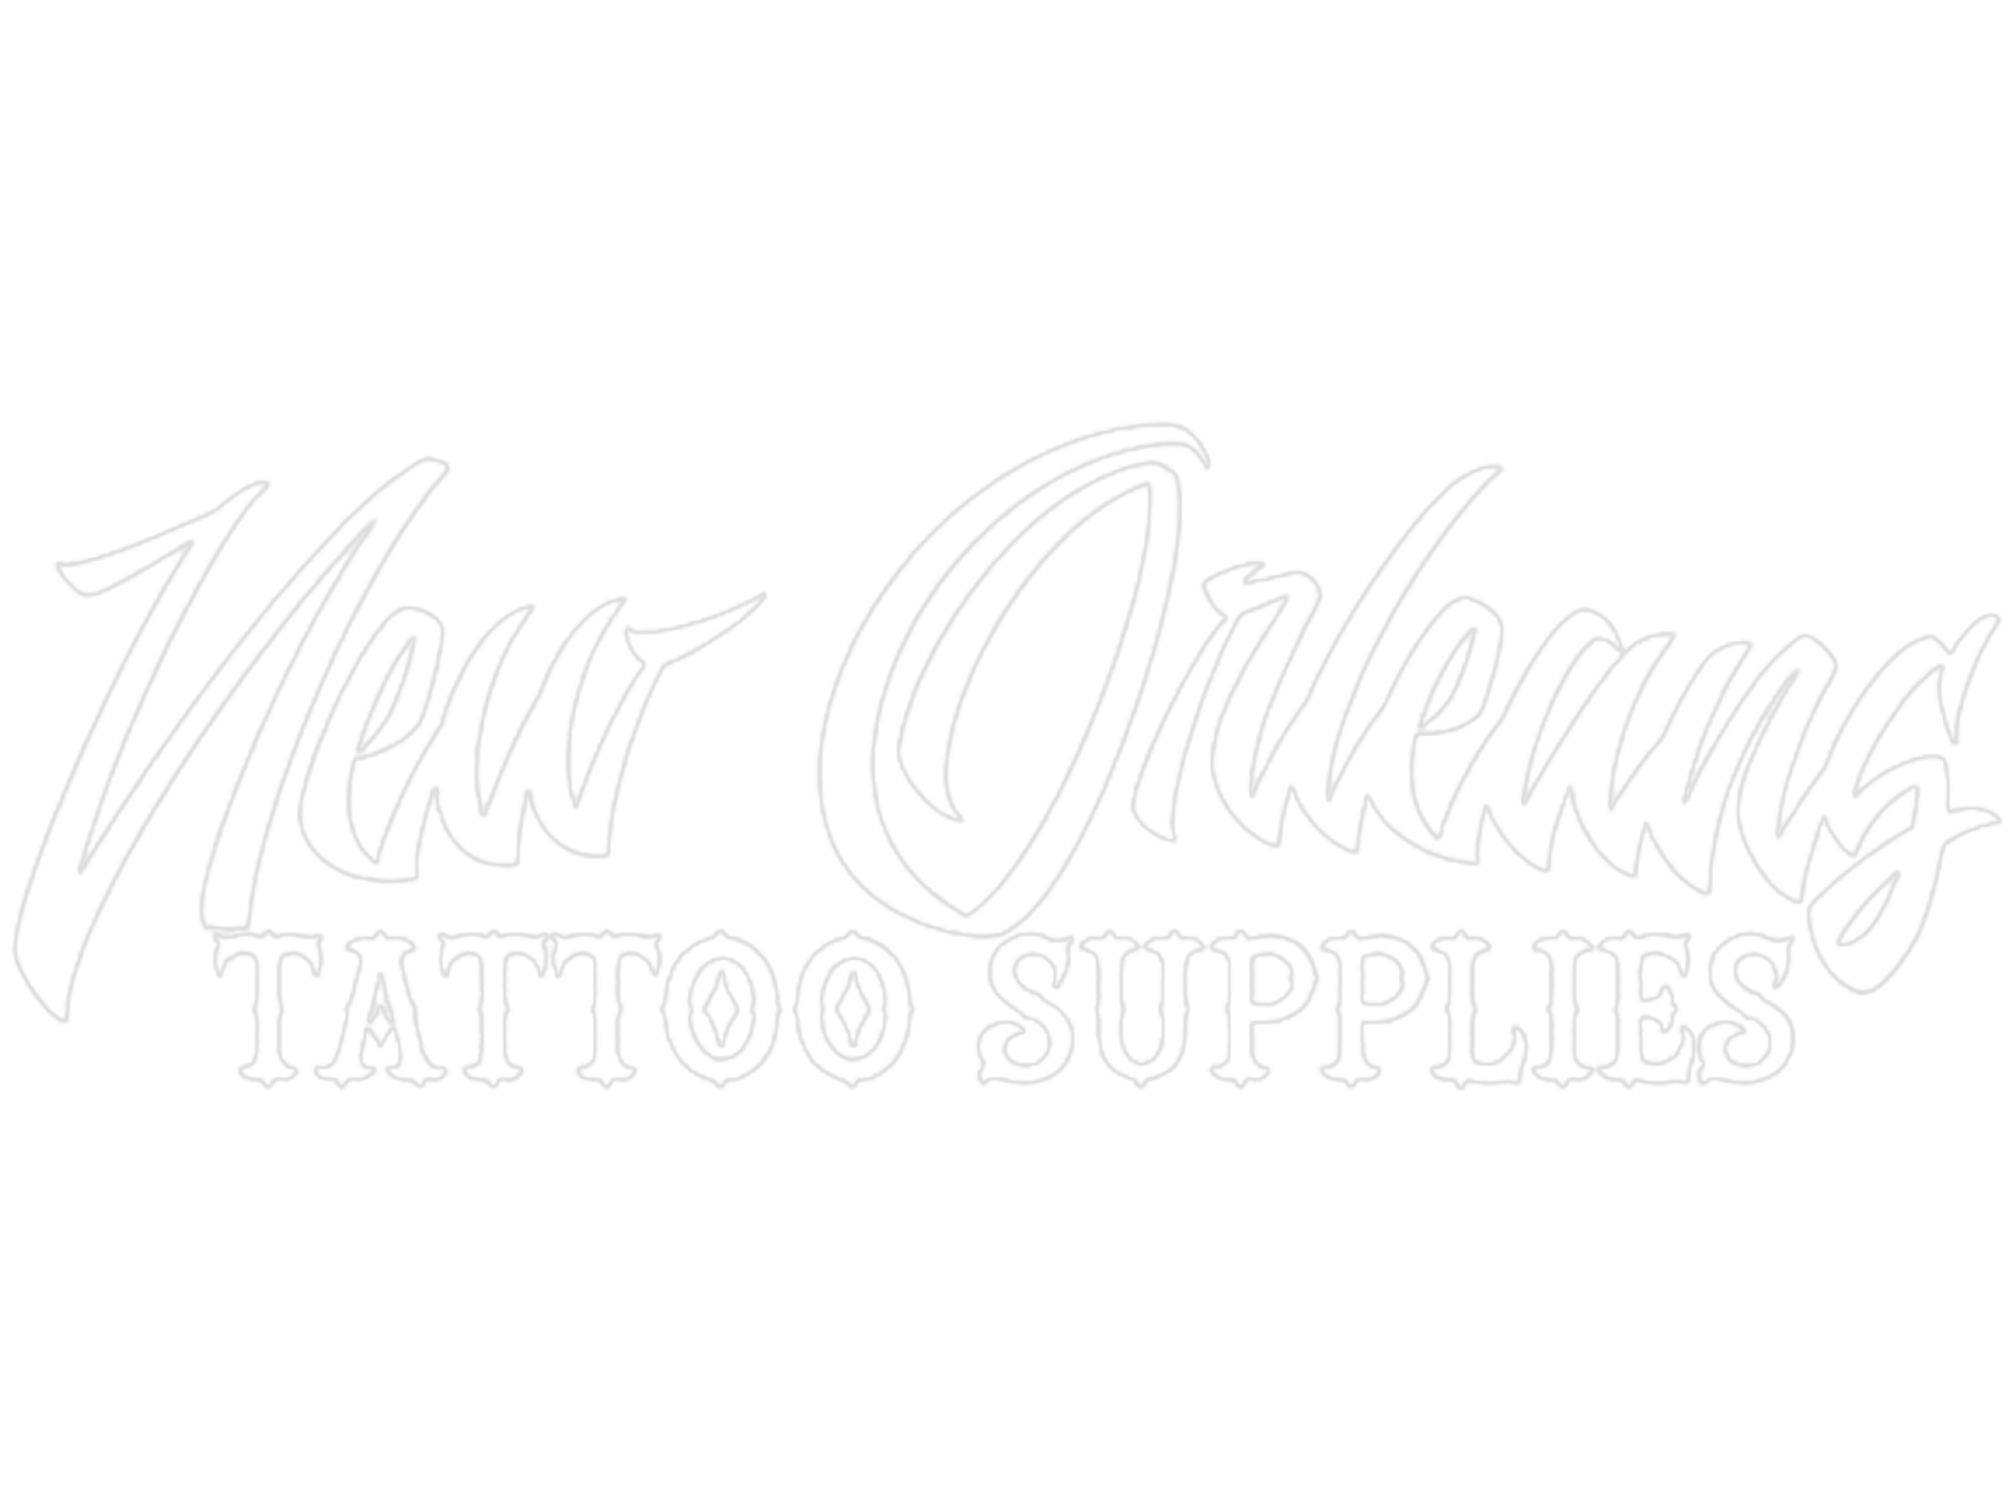 Tattoo Supplies Every Artist Needs - S8 Tattoo